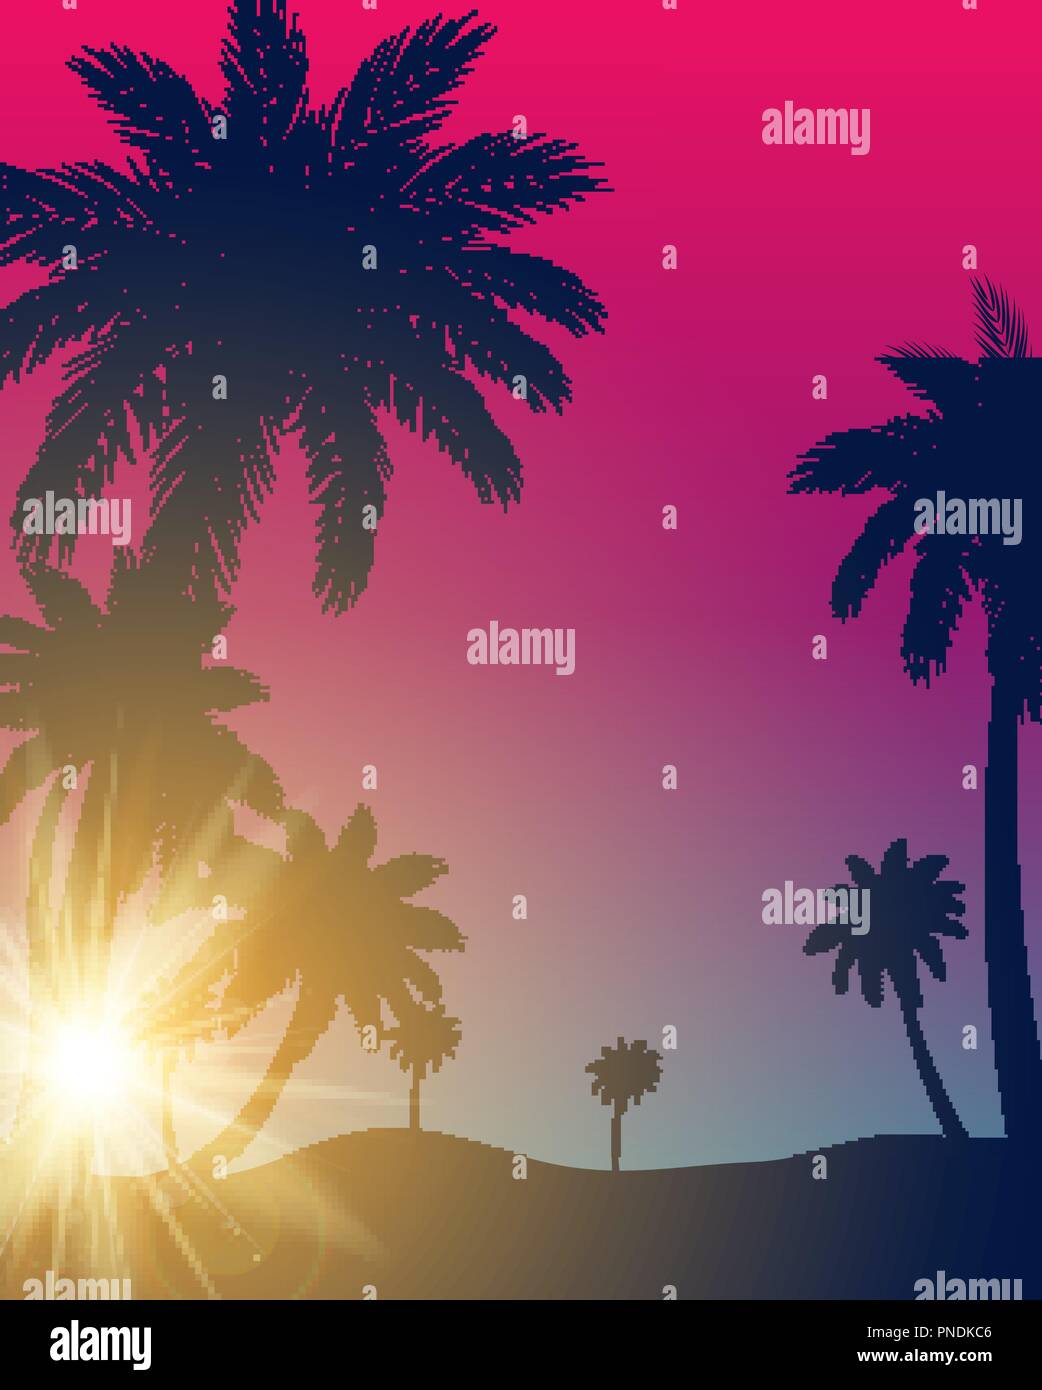 Beautifil Palm Tree foglia sfondo Silhouette illustrazione vettoriale Illustrazione Vettoriale